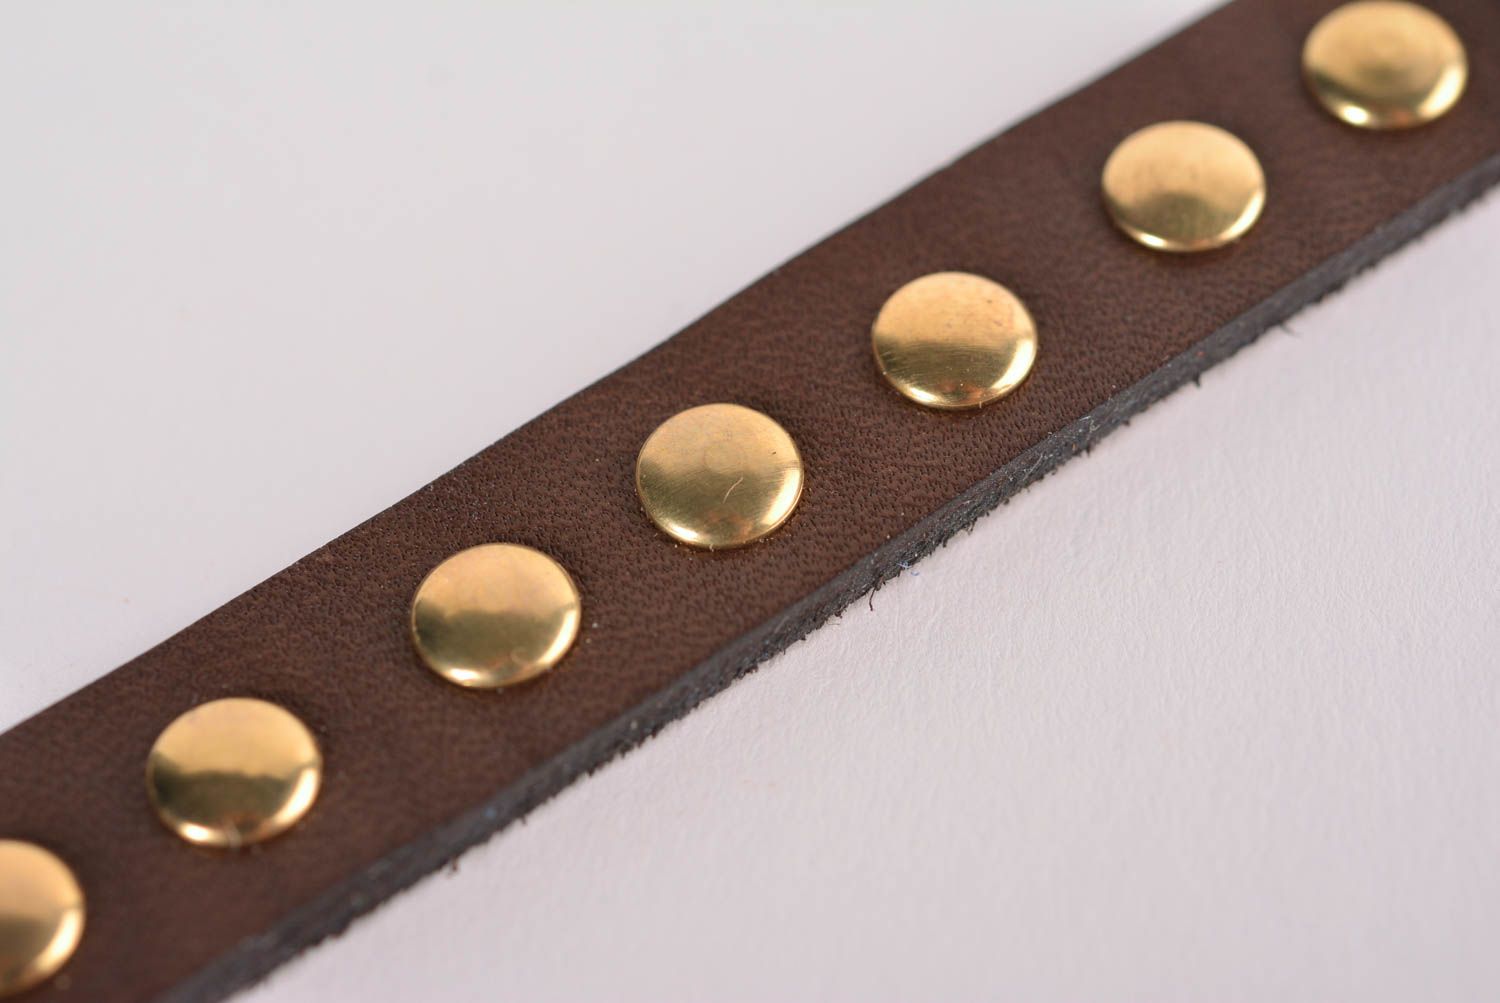 Beautiful handmade leather bracelet fashion accessories leather goods gift ideas photo 5